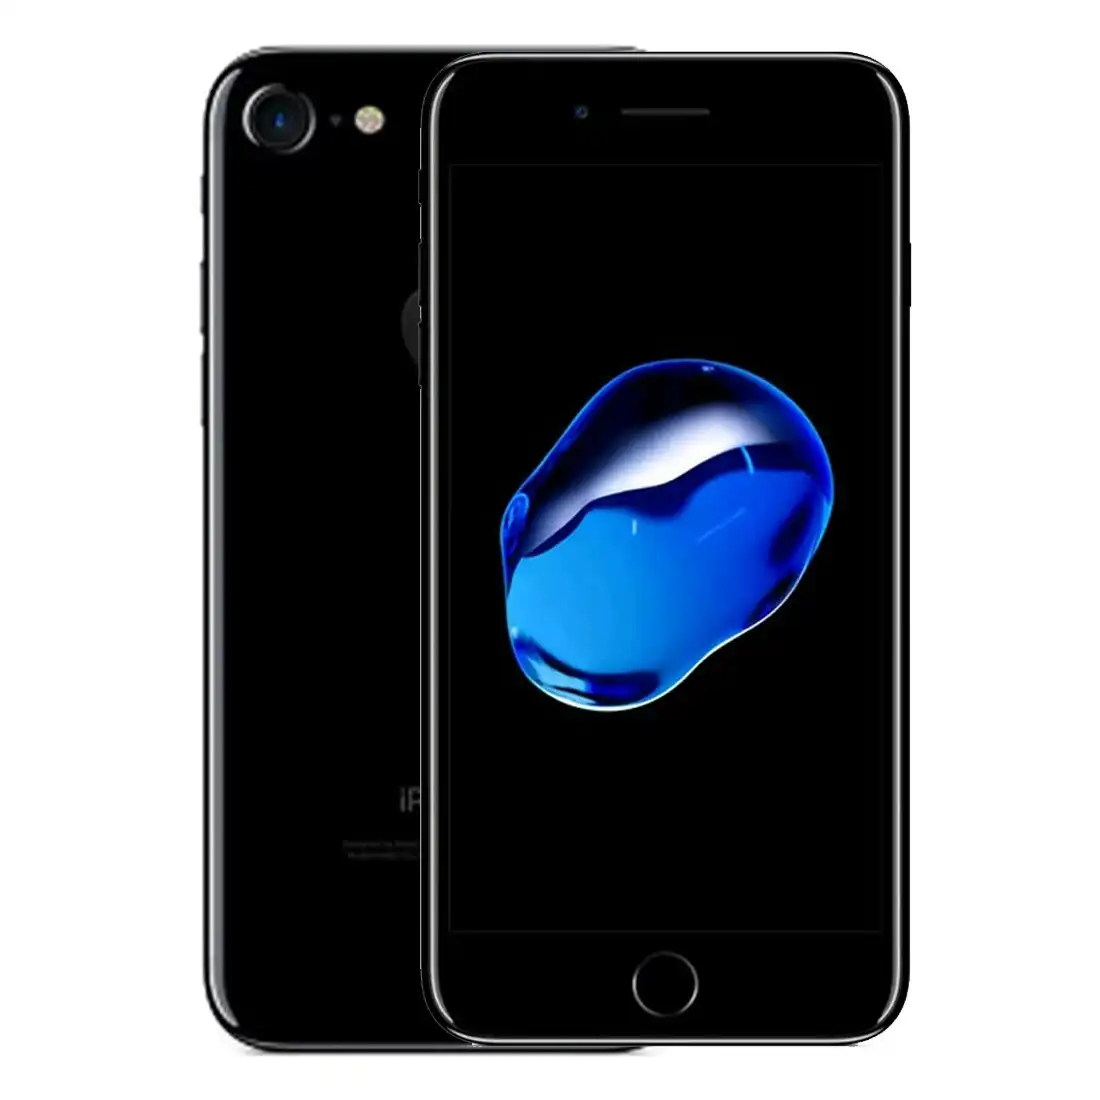 Apple iPhone 7 128GB Jet Black [Refurbished] - Excellent